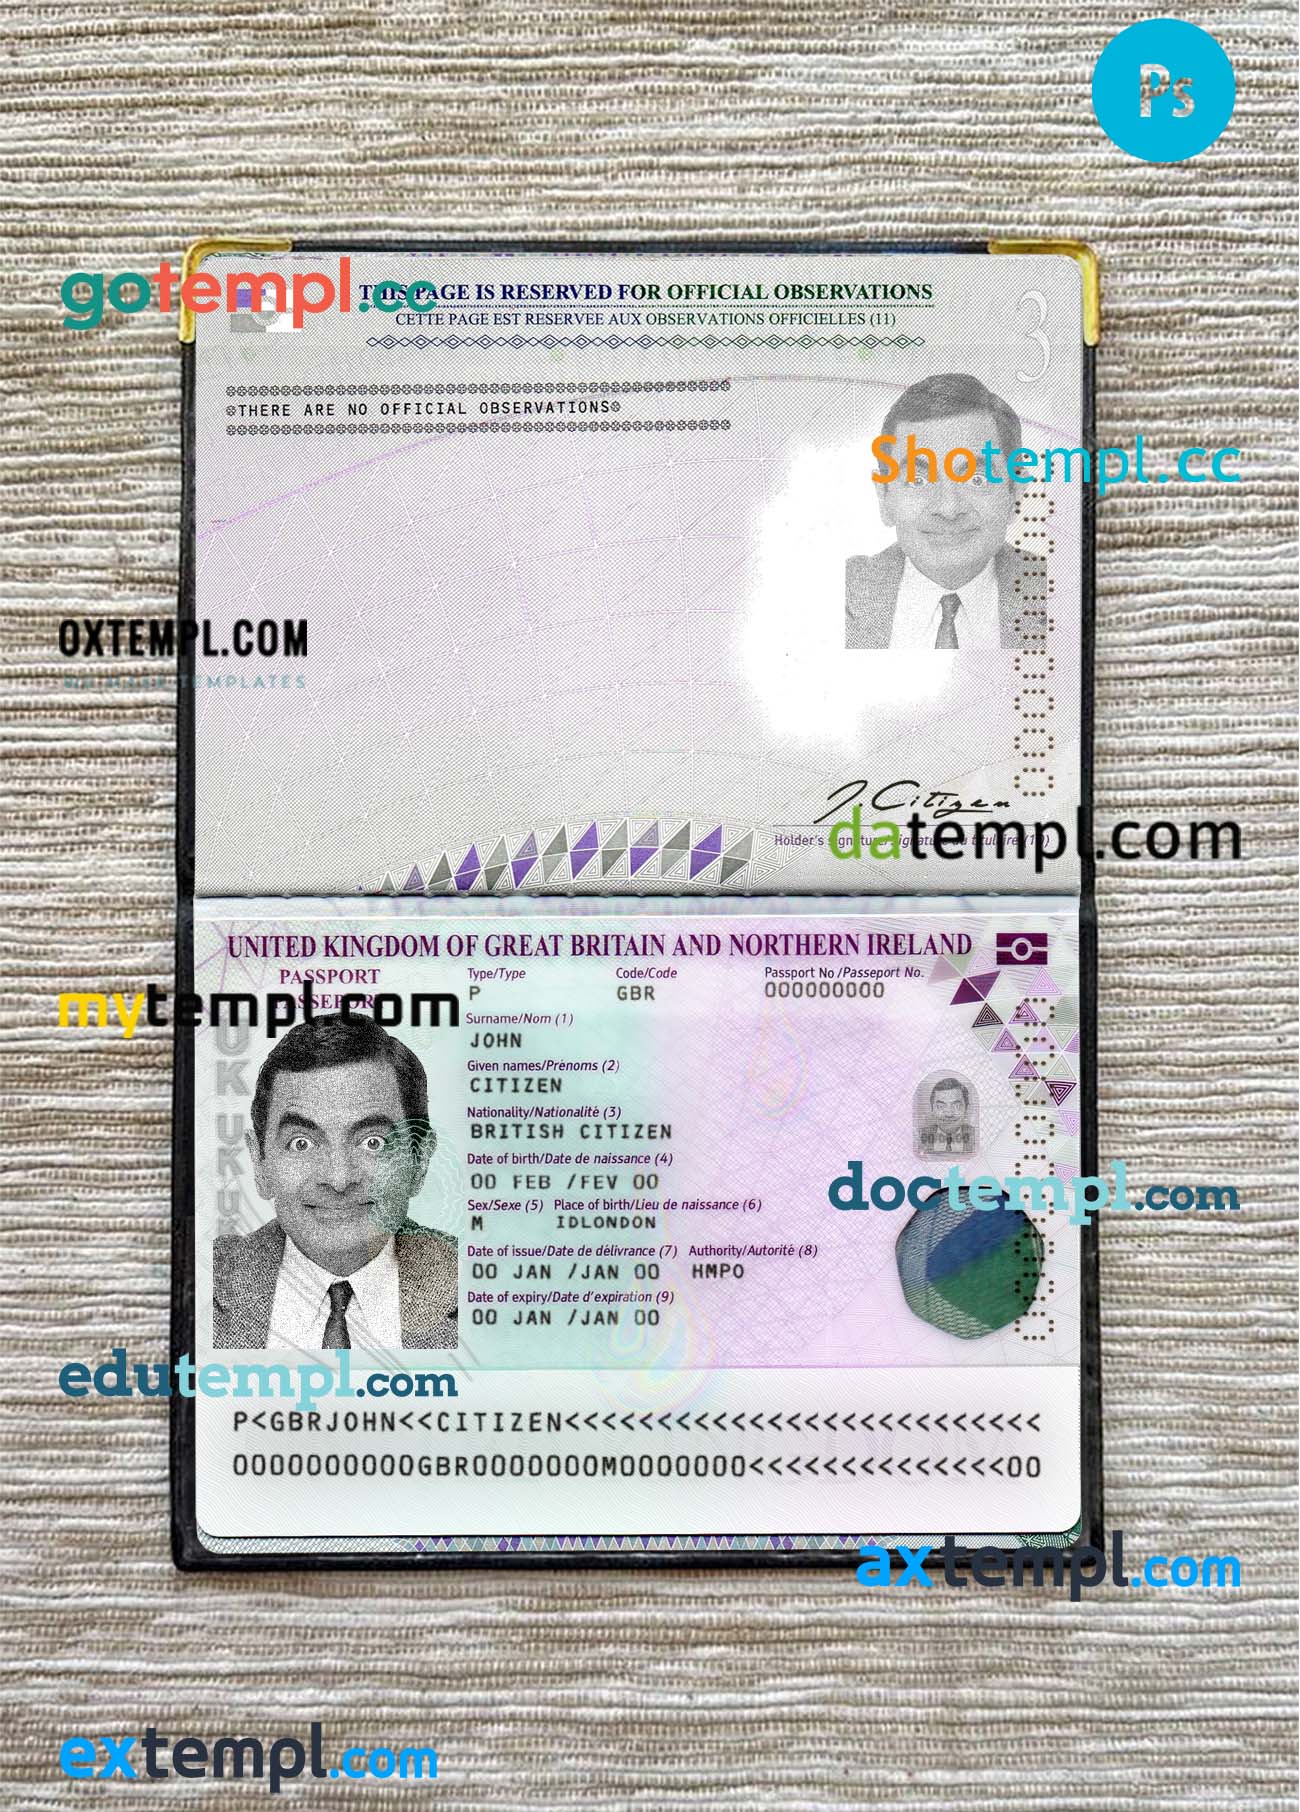 Timor-Leste passport editable PSD files, scan and photo taken image, 2 in 1